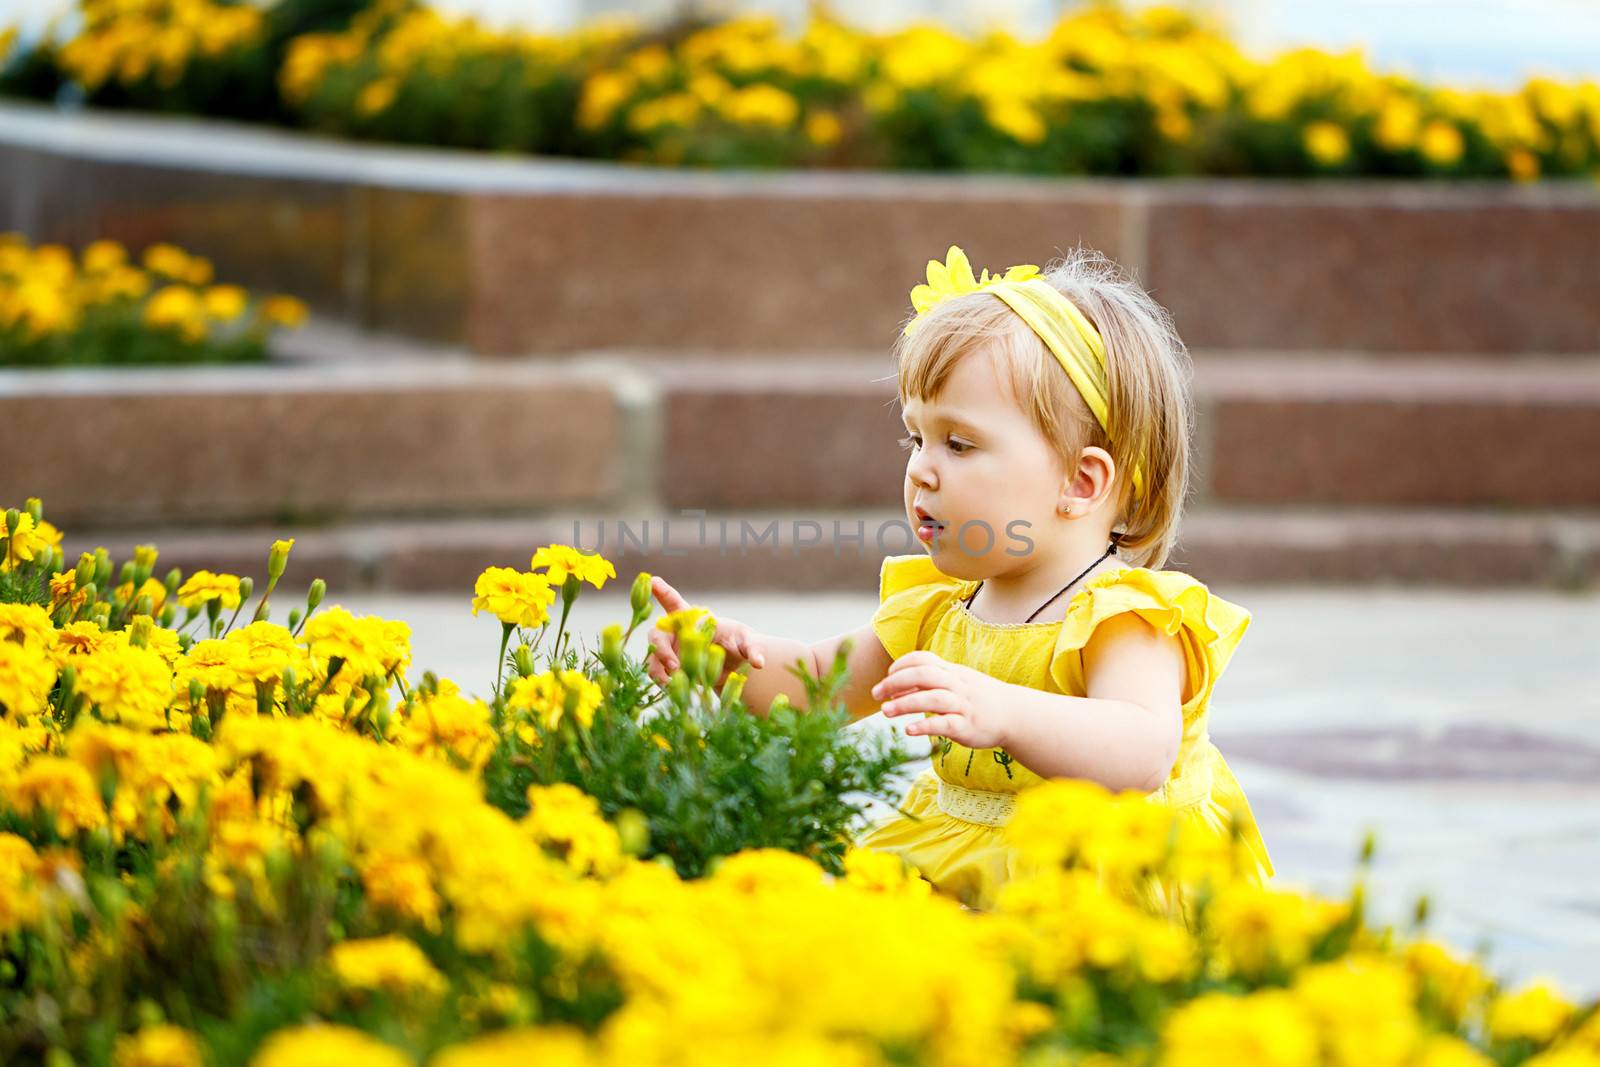 Girl near a flower bed by Vagengeym